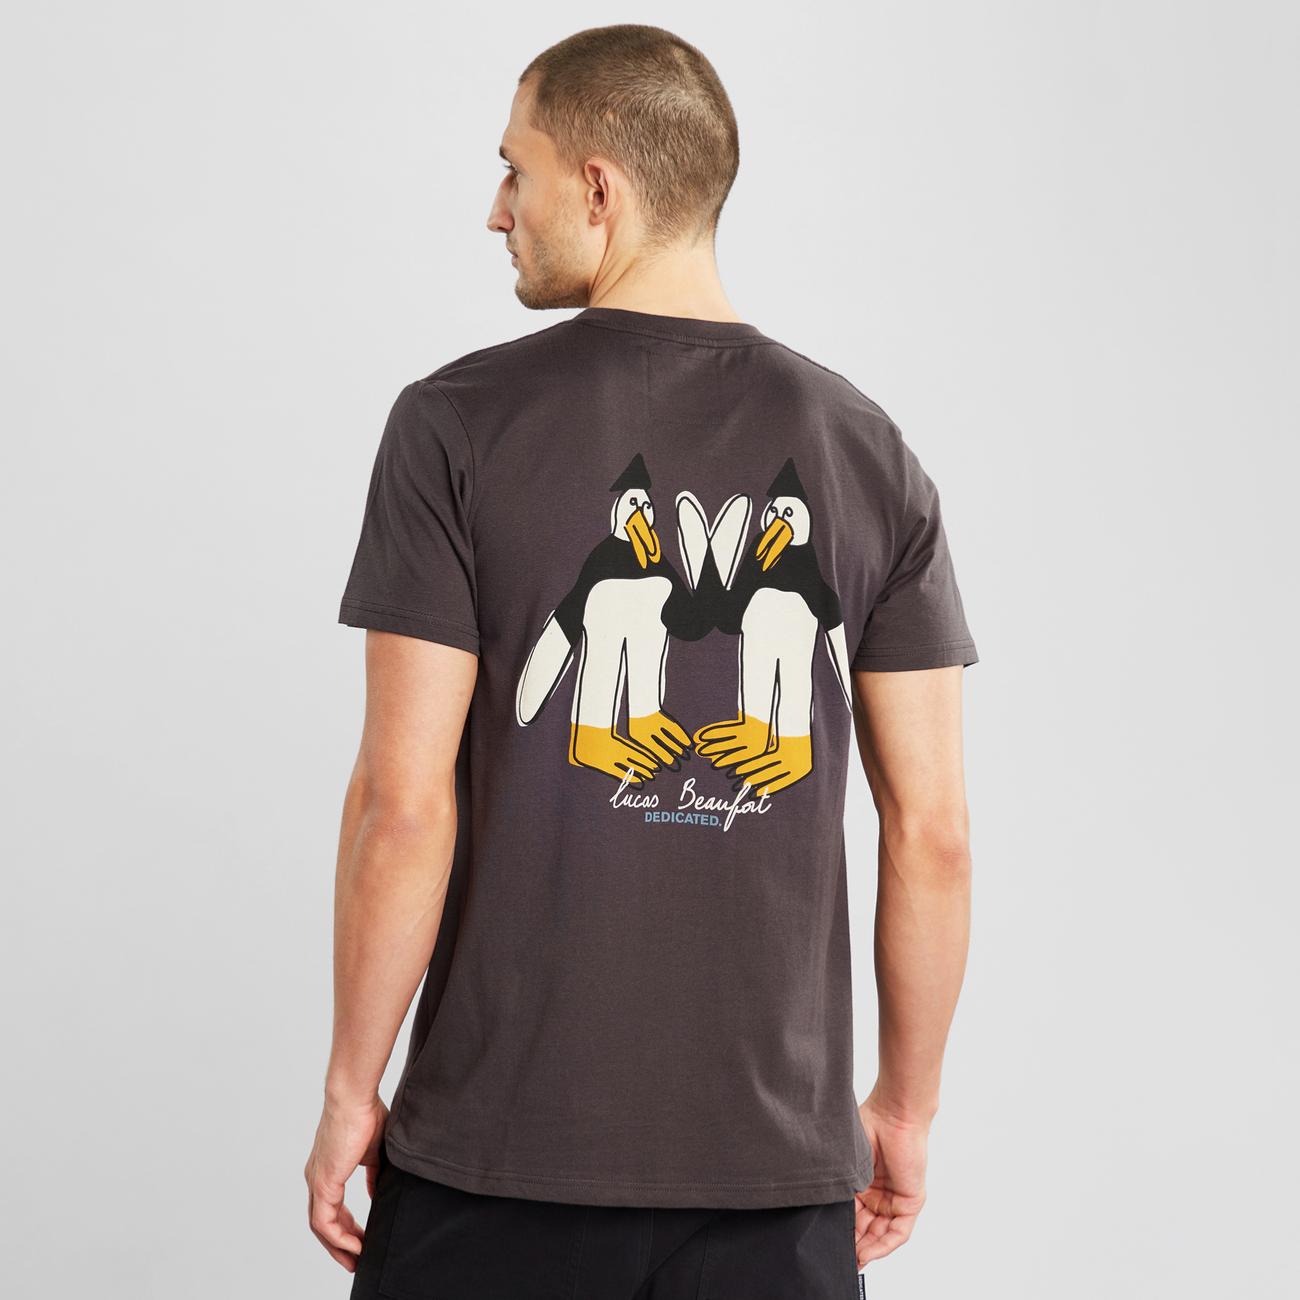  Dedicated    T-shirt Stockholm Lucas Penguin Friends Charcoal 20414